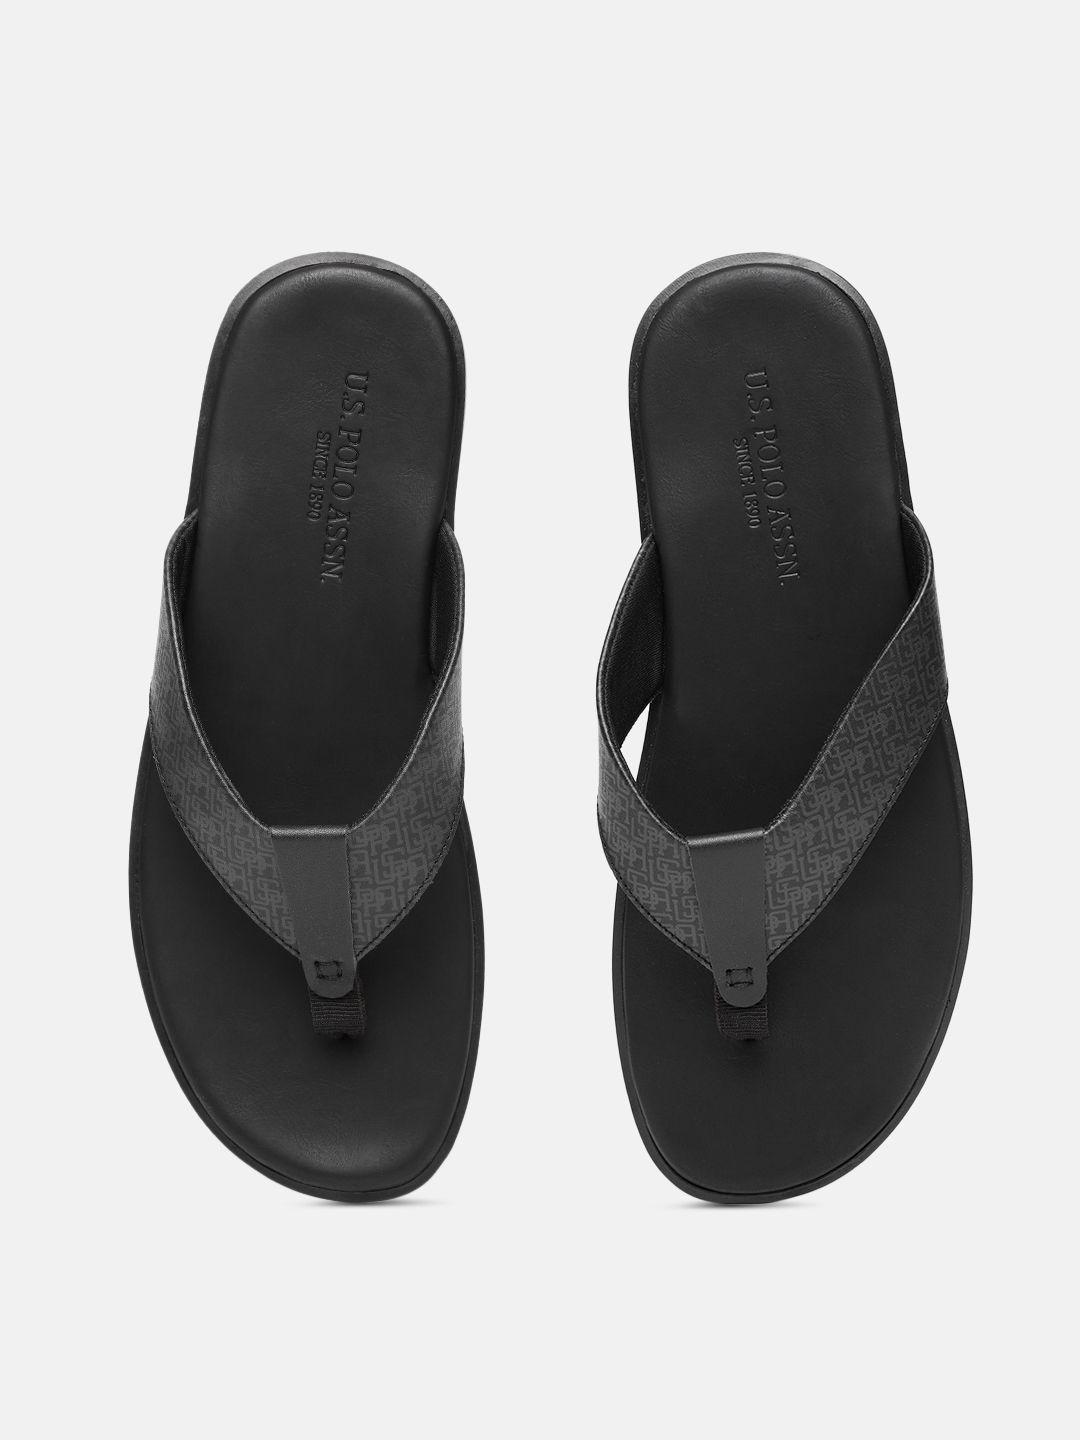 u.s.-polo-assn.-men-black-leather-donlack-2.0-comfort-sandals